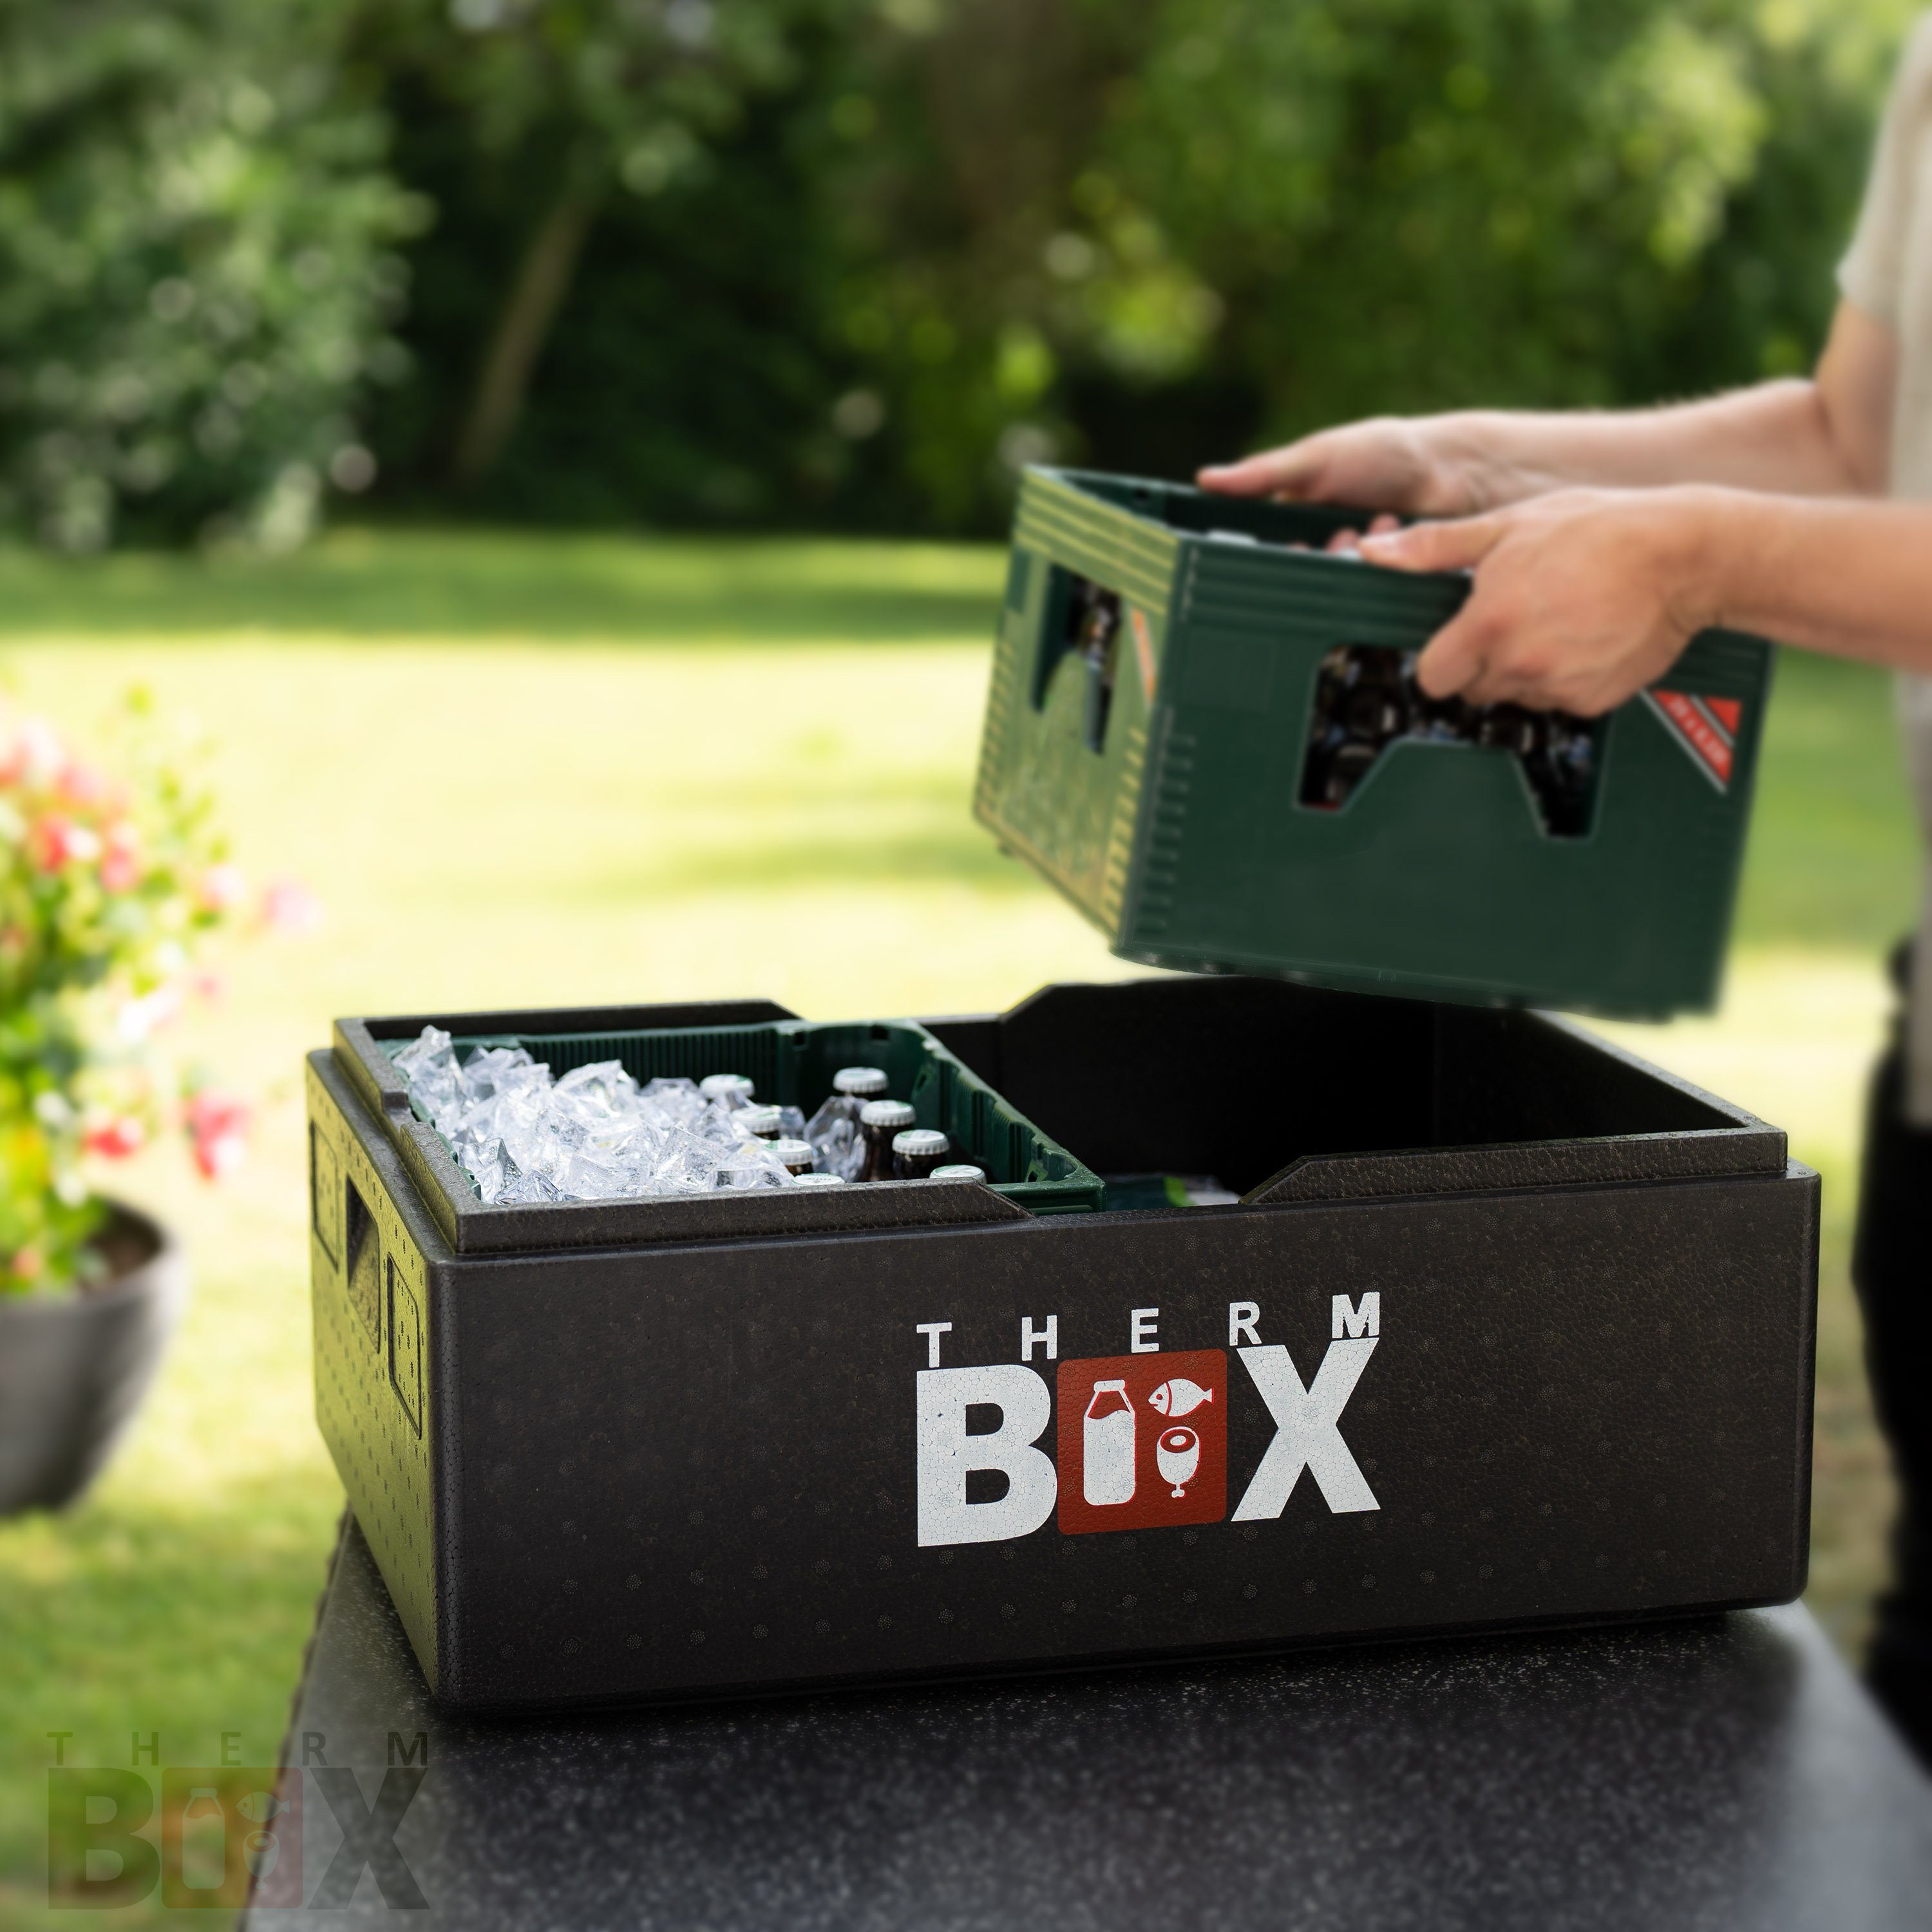 0-tlg., Thermobehälter Wiederverwendbar, im Karton), (1, 53-Liter Warmhaltebox mit Styroporbox Box für Profibox Thermobox Innen: Kiste E2 Deckel 62,5x42,5x22cm THERM-BOX - Styropor-Piocelan, Kühlbox B53